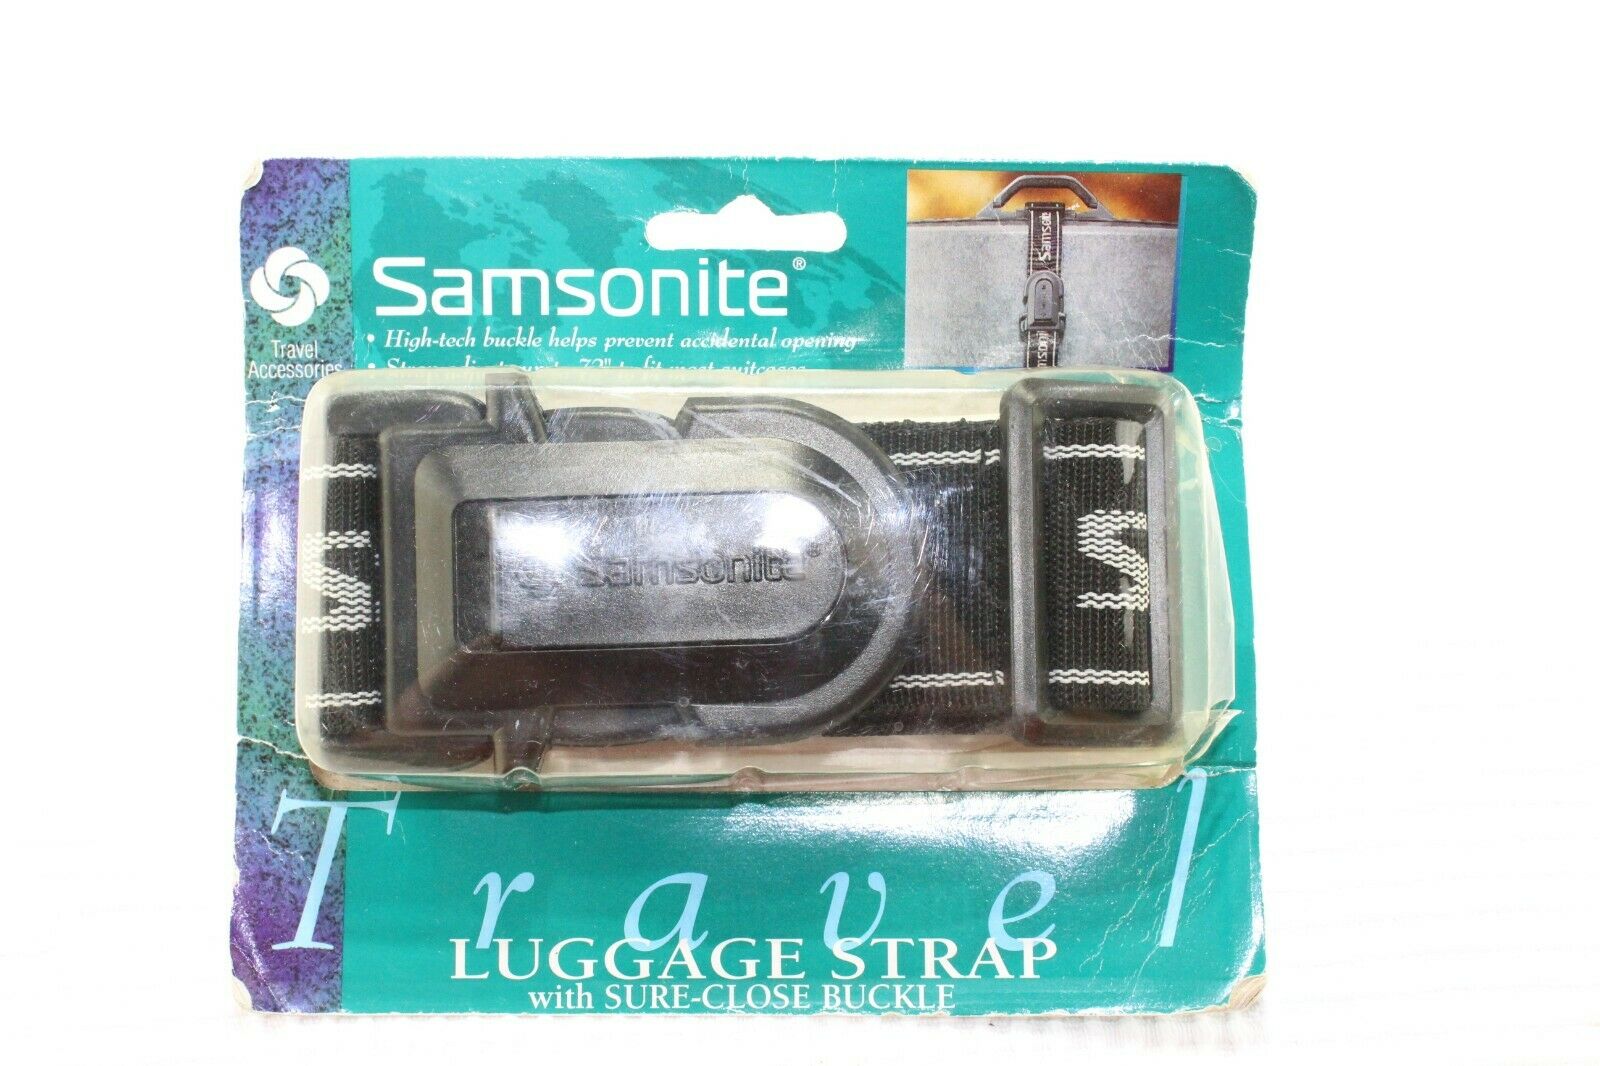 Samsonite Travel Luggage Strap W/ Sure Close Buckle Brown Beige 72" Long